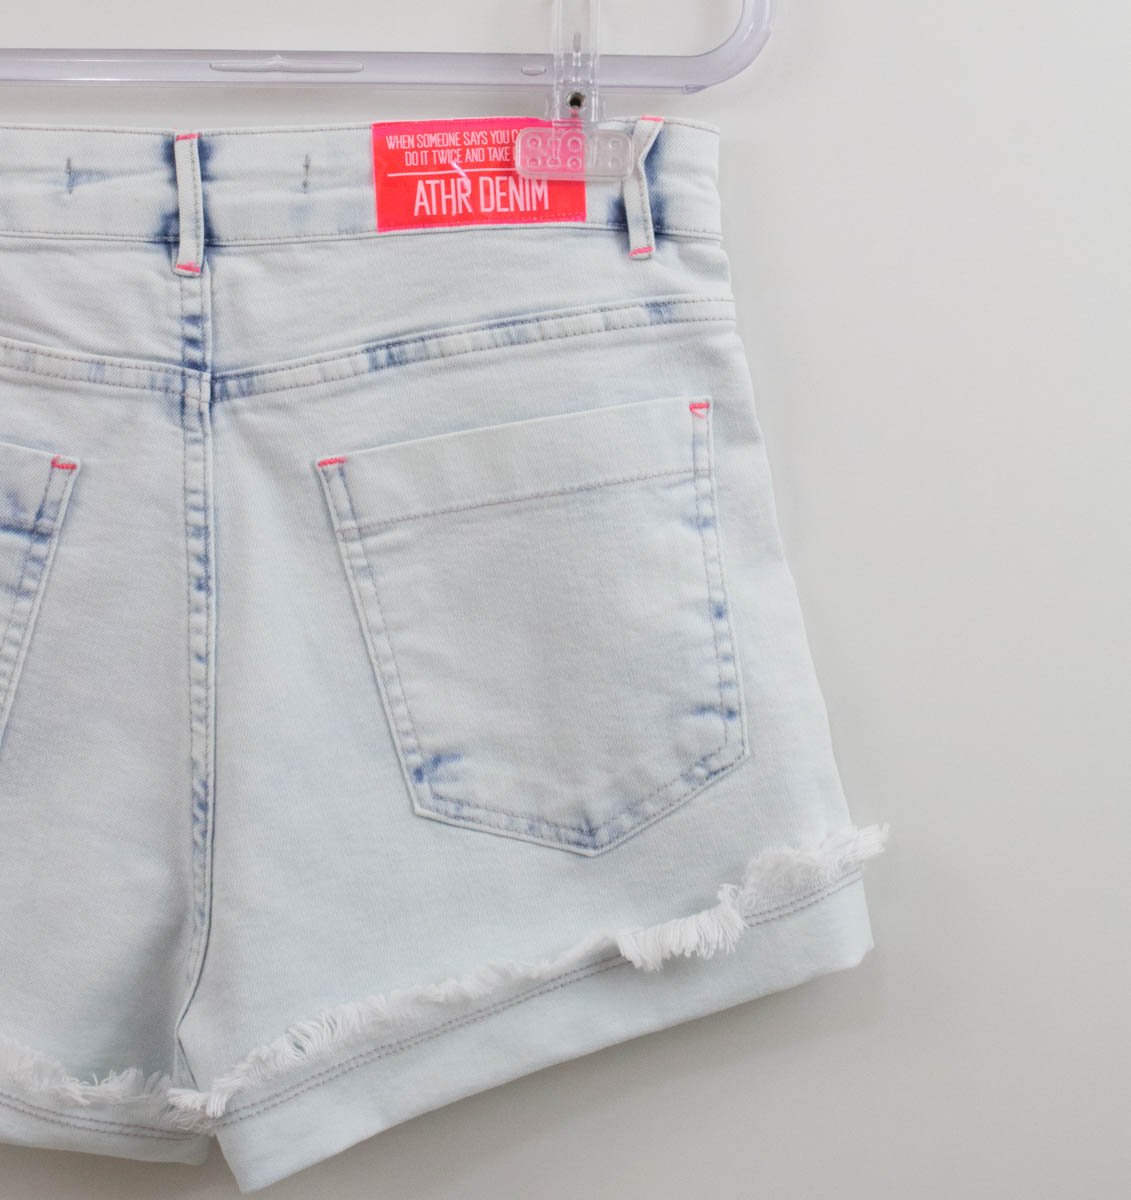 Short Jeans Branco Tipo Clochard Authoria - Xuá Kids